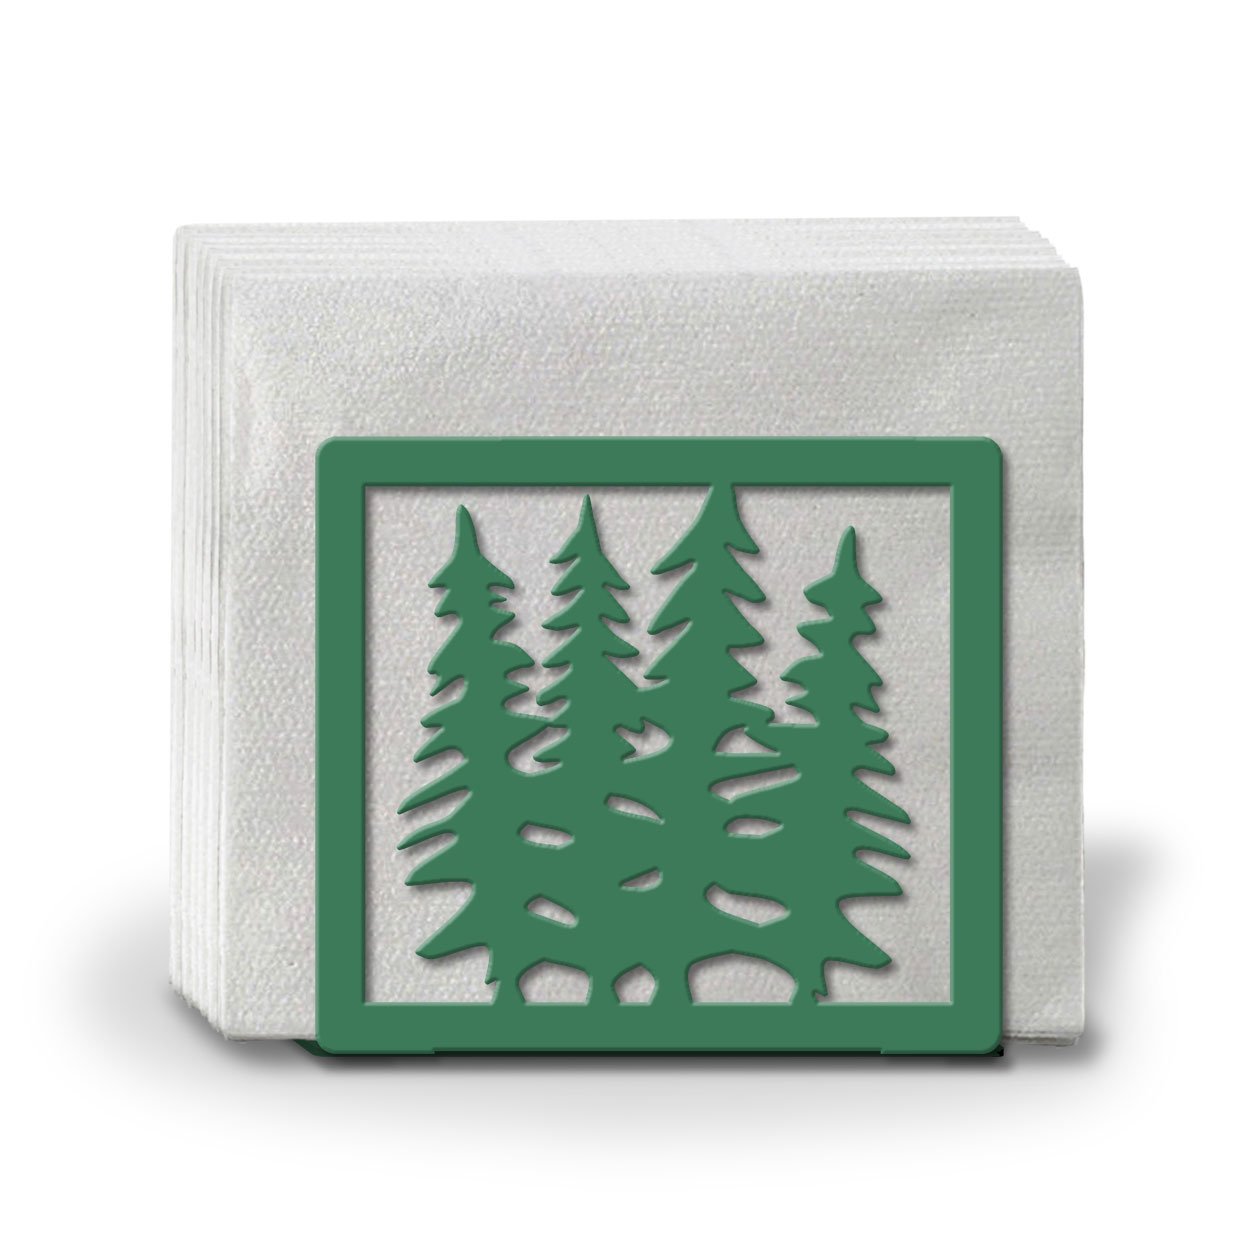 621102 - Bear and Trees Metal Napkin or Letter Holder - Choose Color